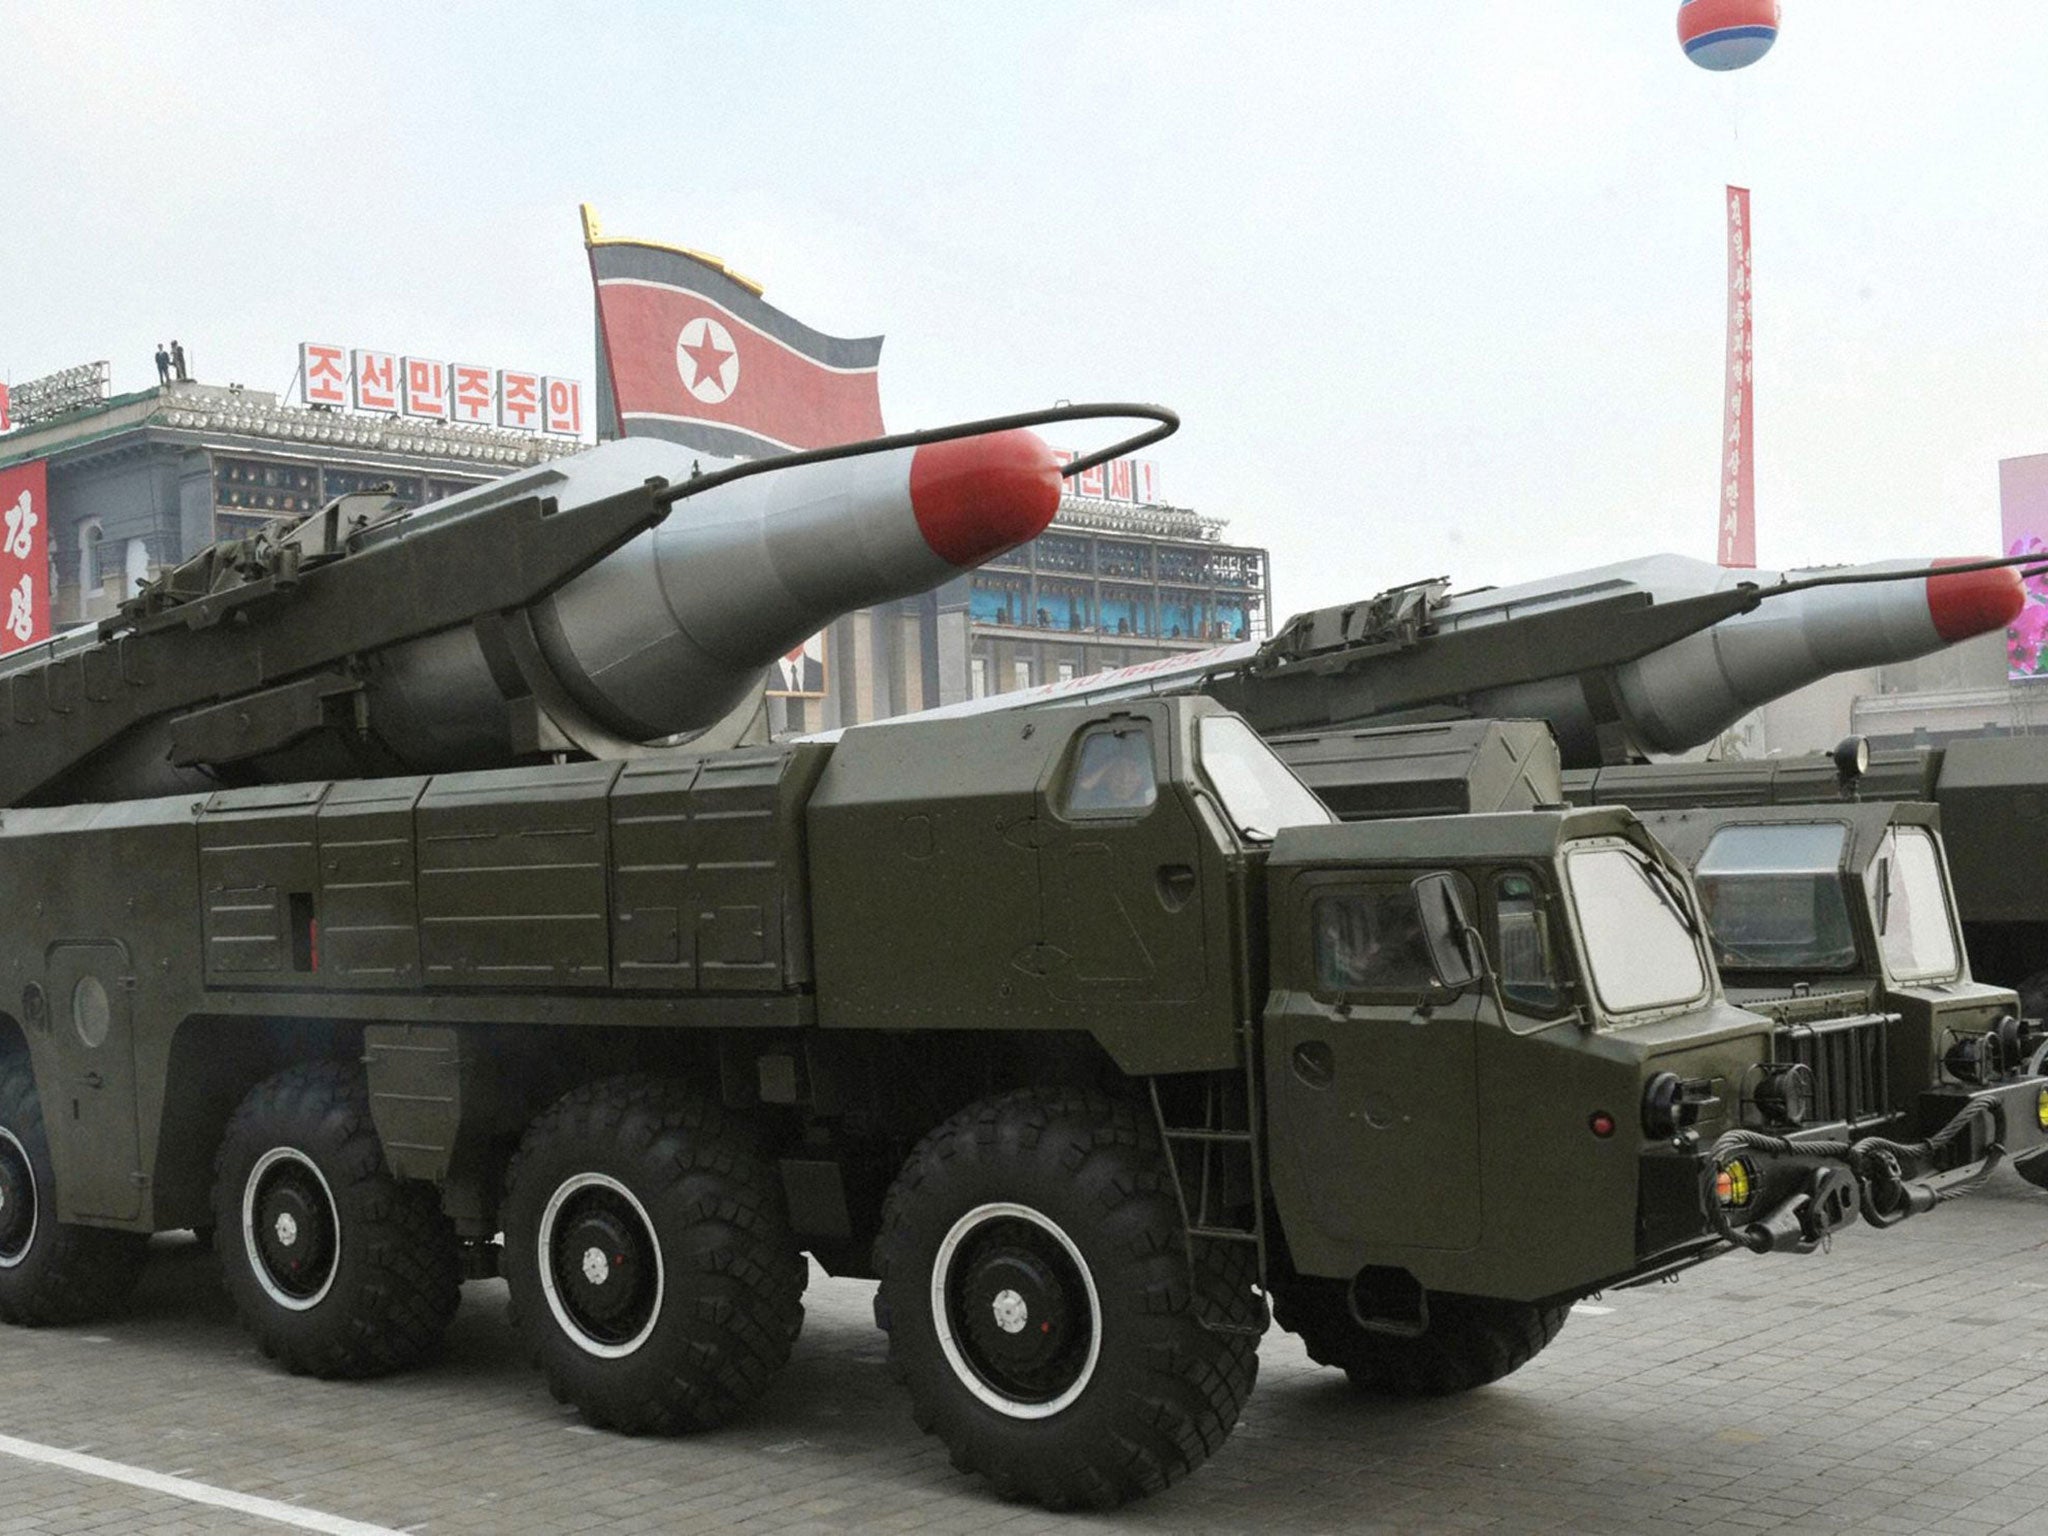 'Musudan' missiles displayed during a military parade in North Korea